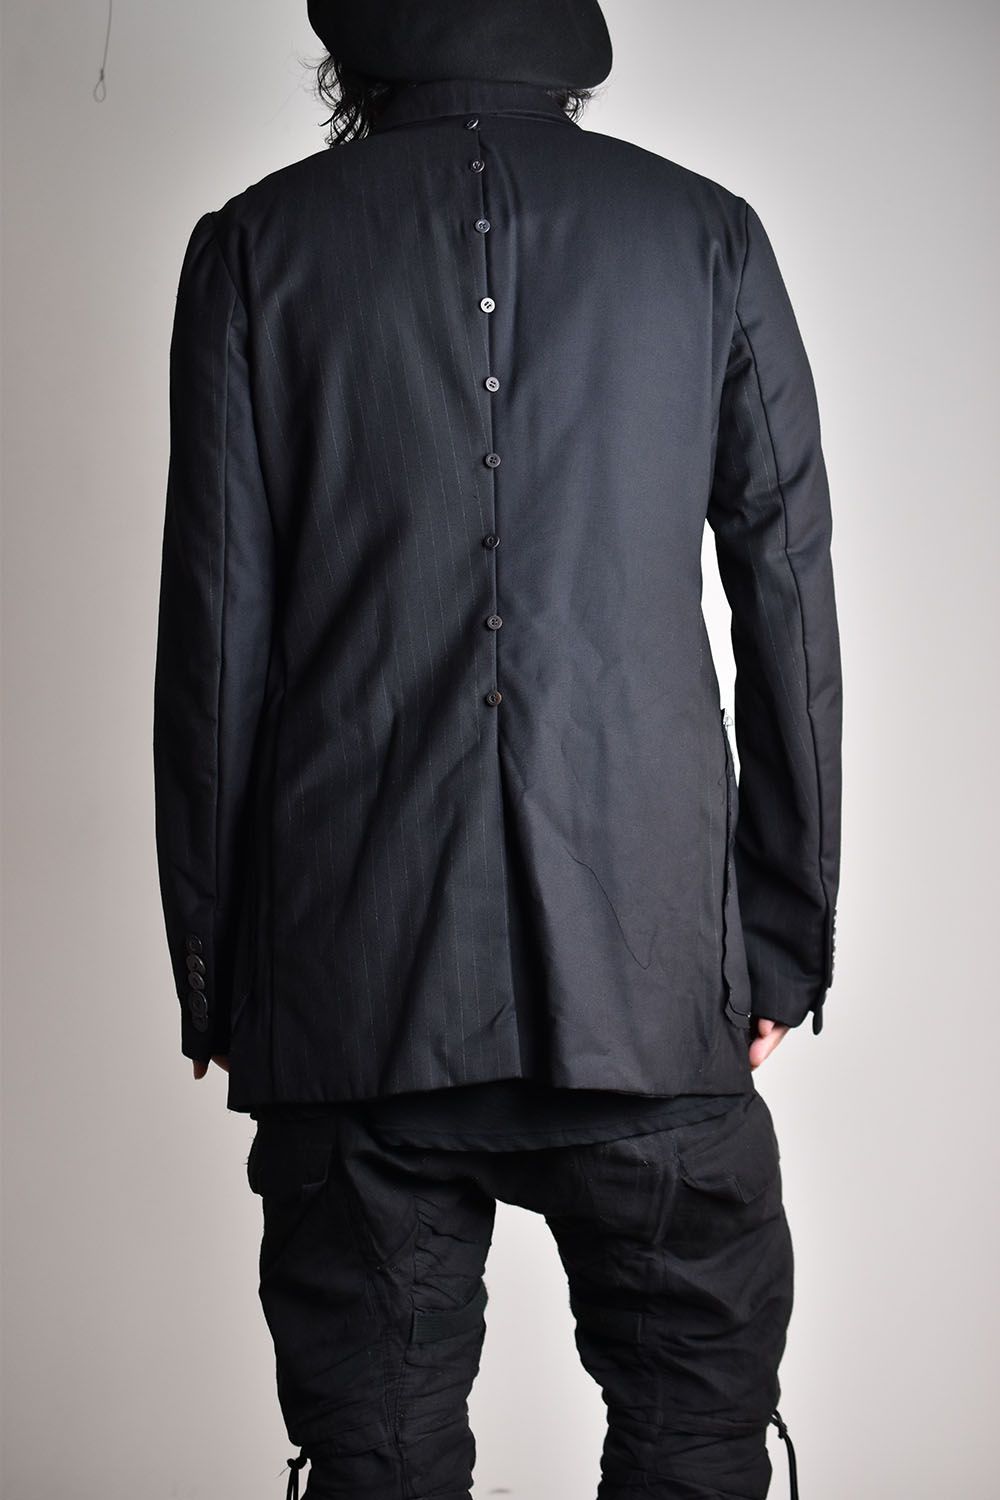 nude:masahiko maruyama - Patched Jacket W Half Vest